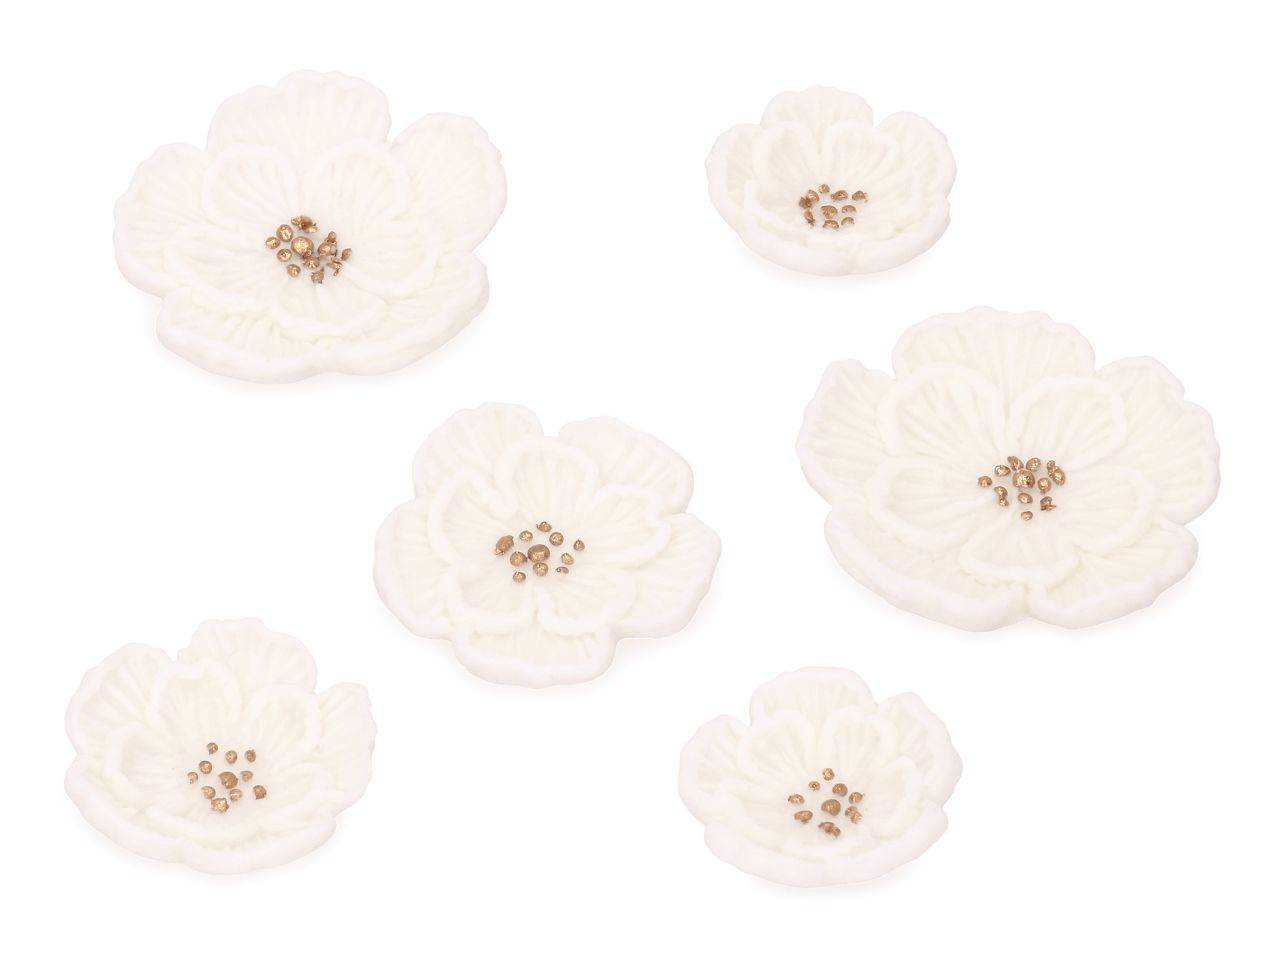 Fondant-Blumen Blüten-Set in Weiß, 6 Stück á 3/4/5 cm